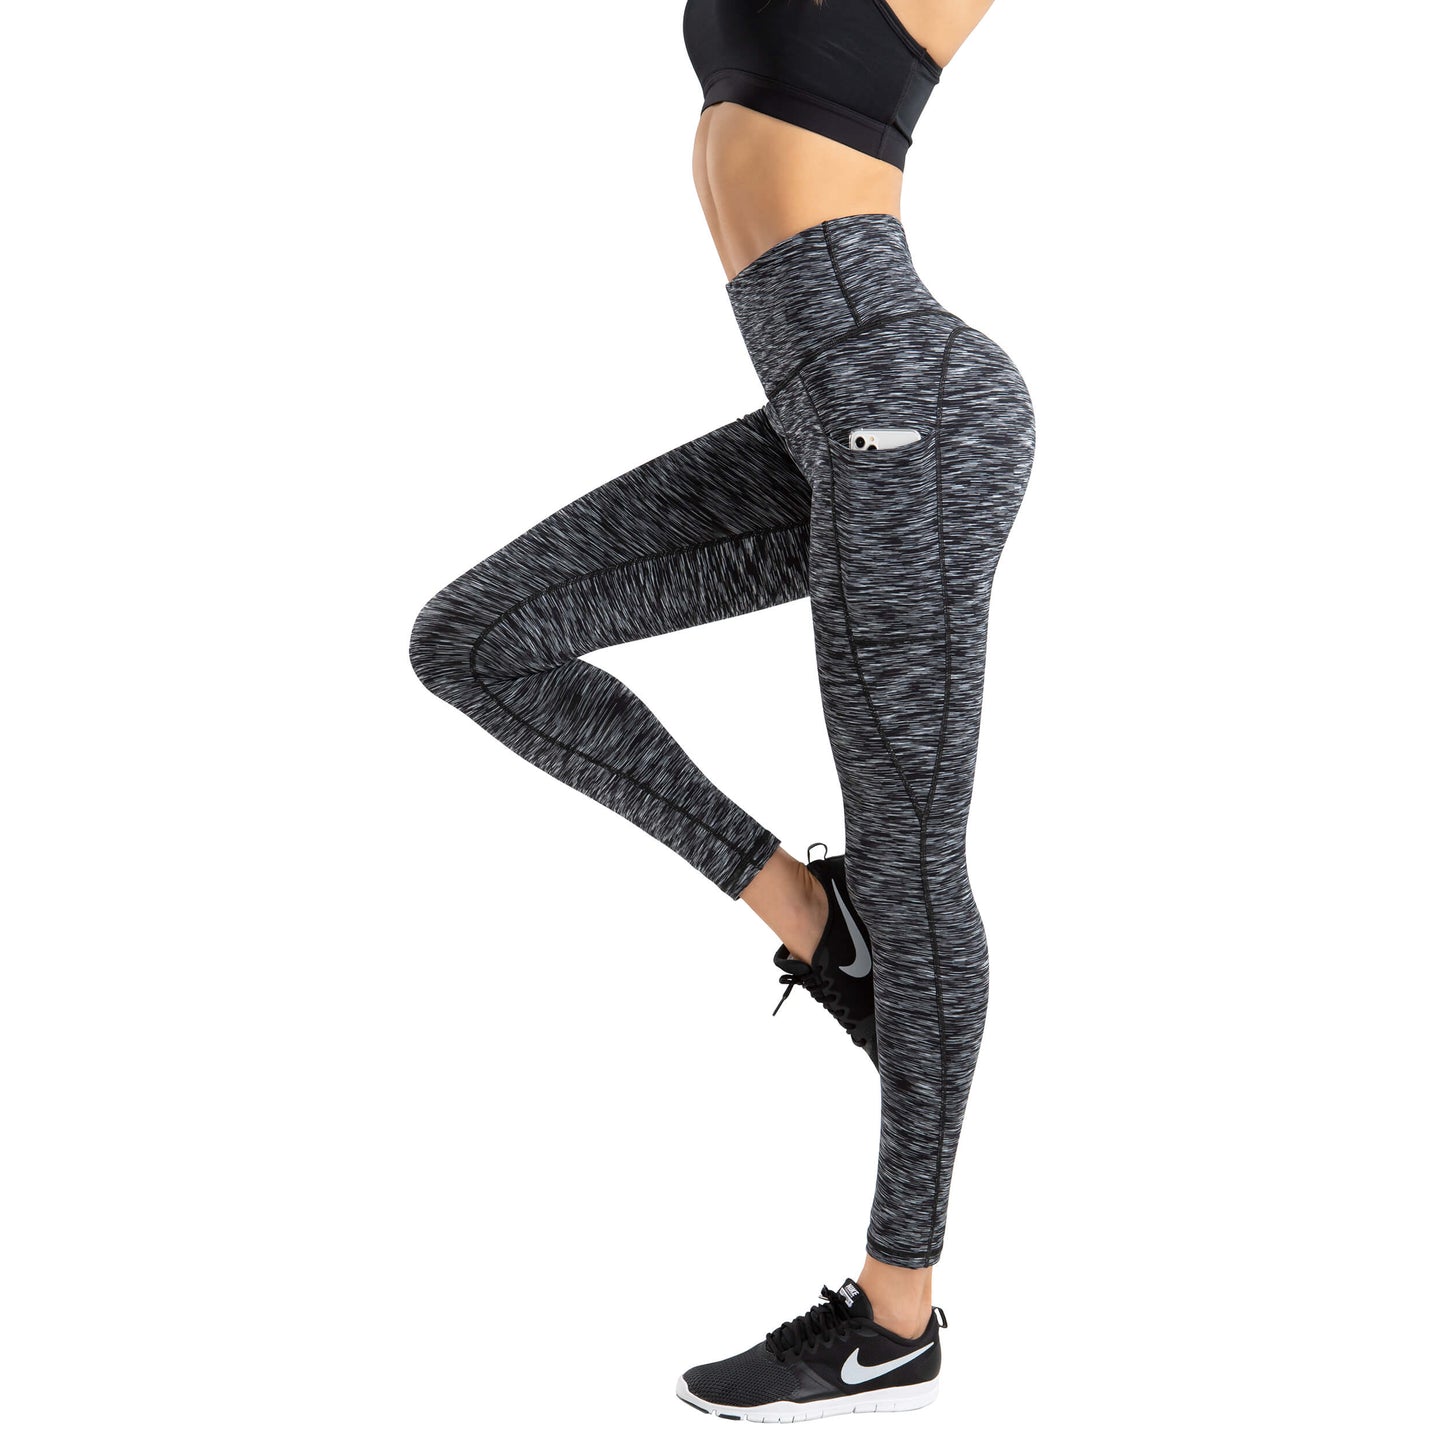 iKeep<sup>&reg;</sup> High flexibility Yoga Legging with Pockets